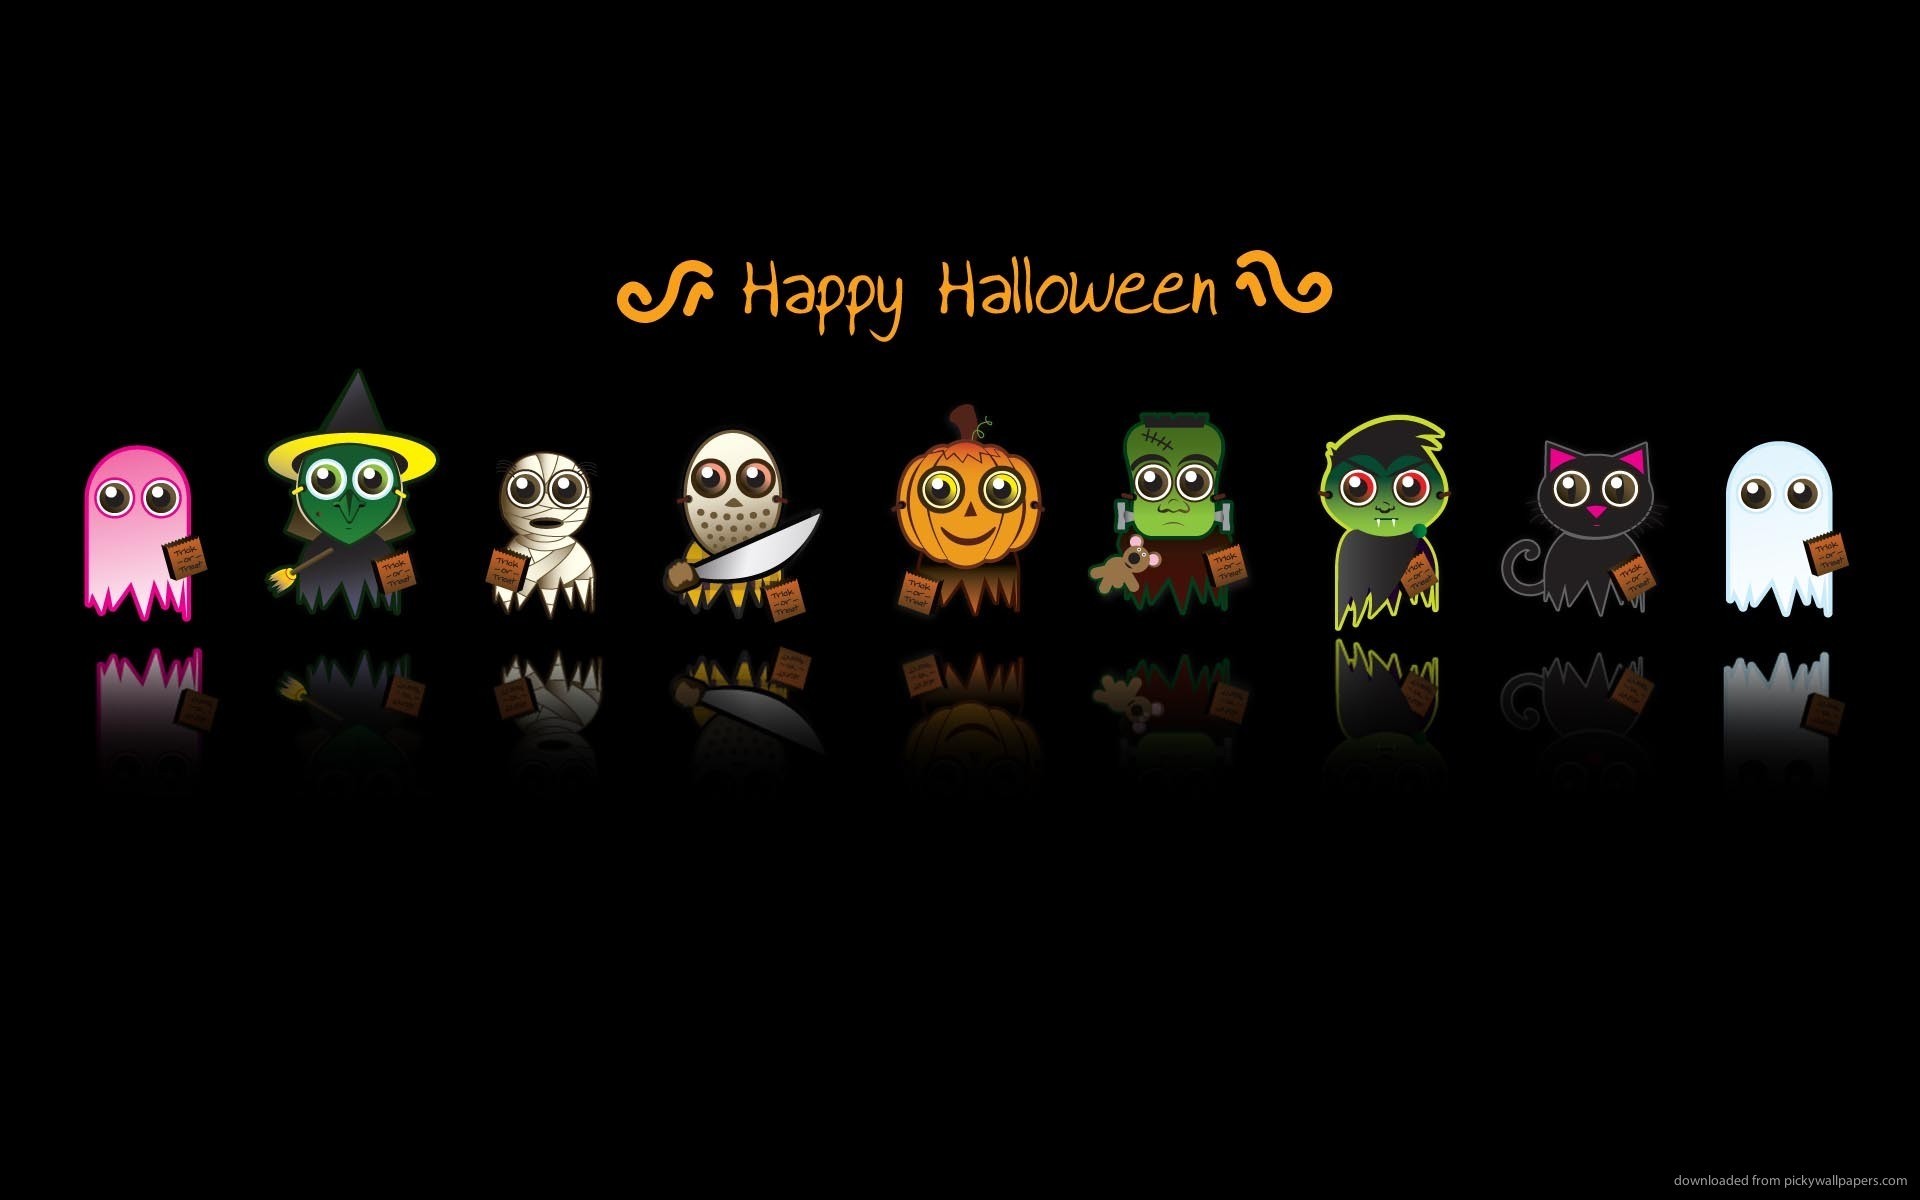 Cute Halloween Desktop Wallpaper images